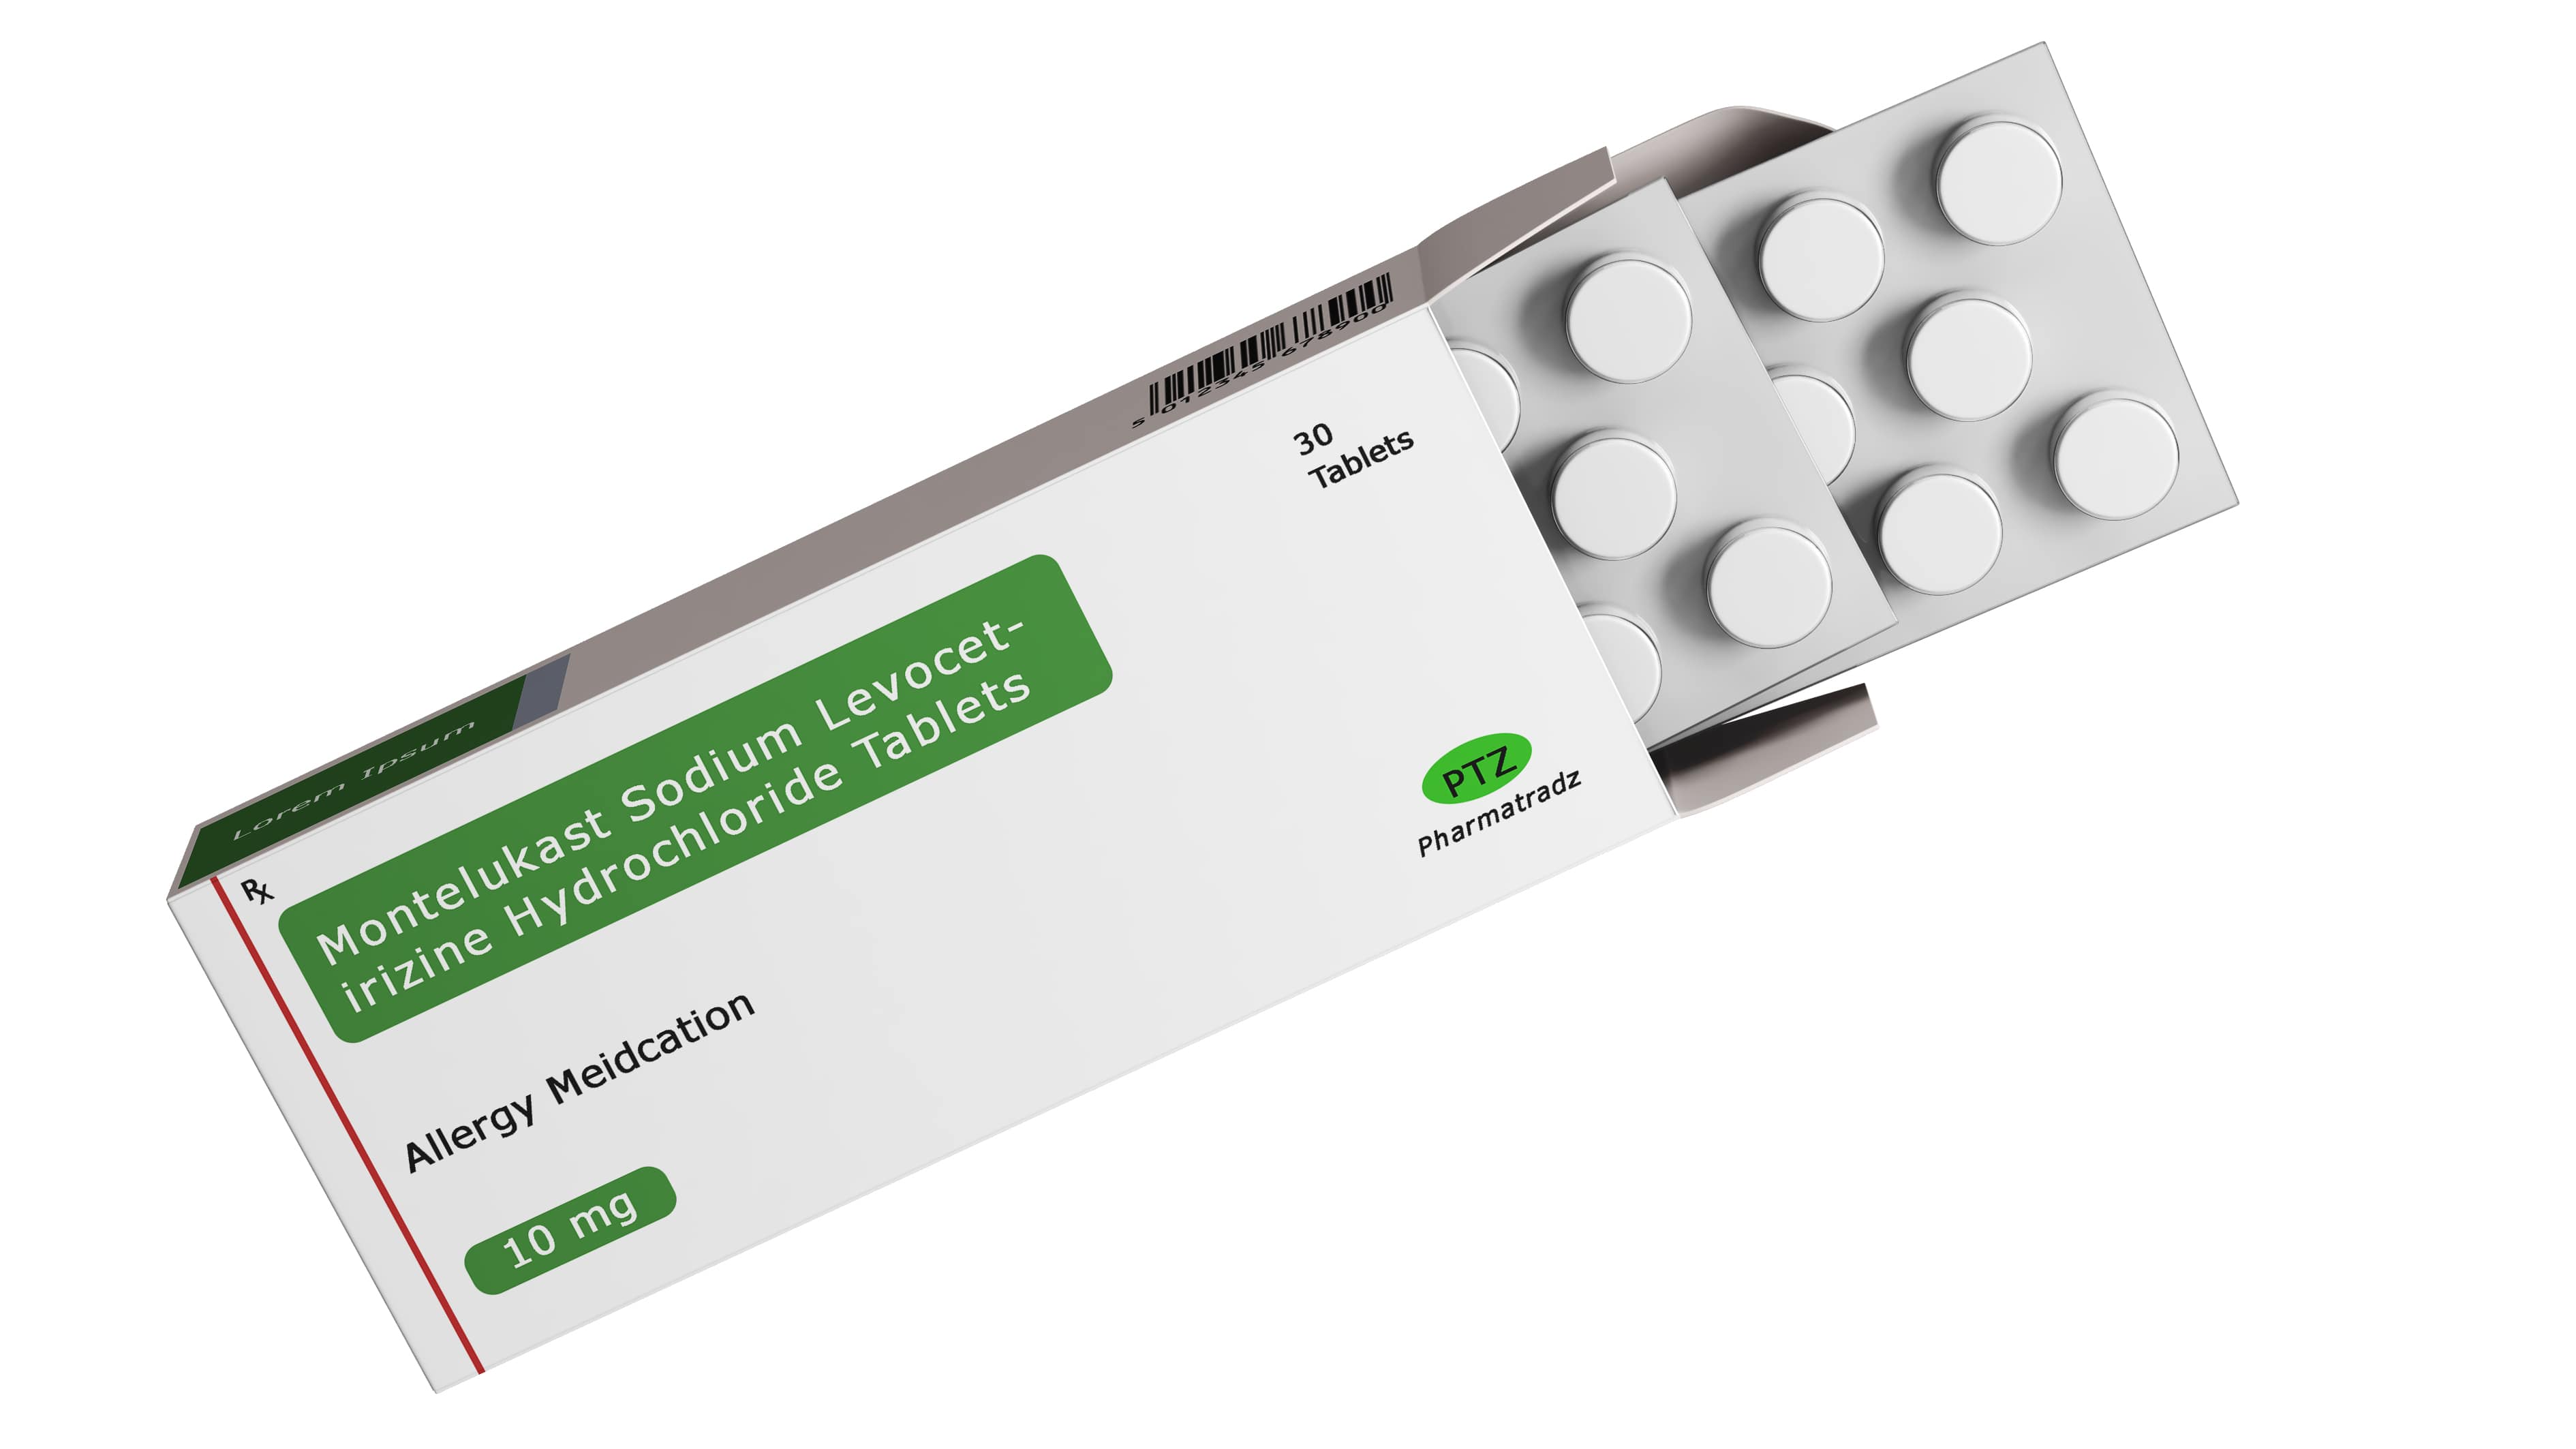 Montelukast Sodium Levocetirizine Hydrochloride Tablets